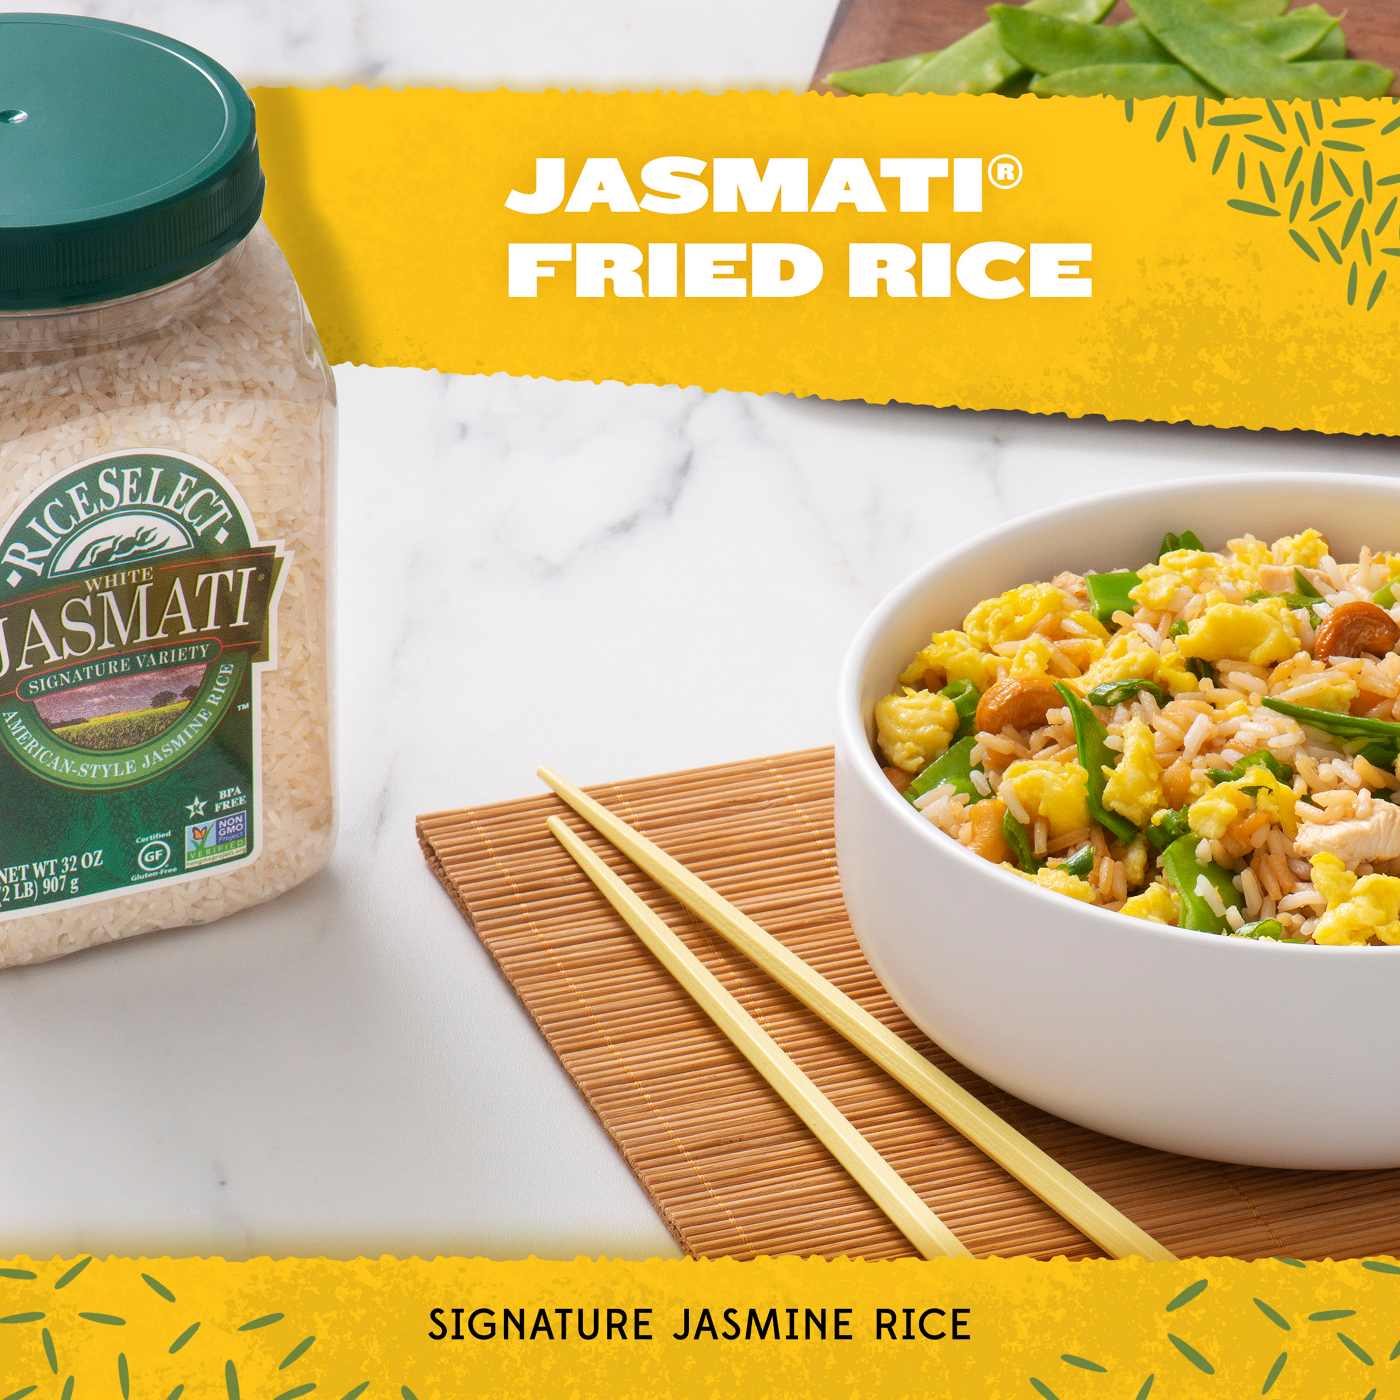 RiceSelect Jasmati Long Grain Jasmine Rice; image 2 of 5